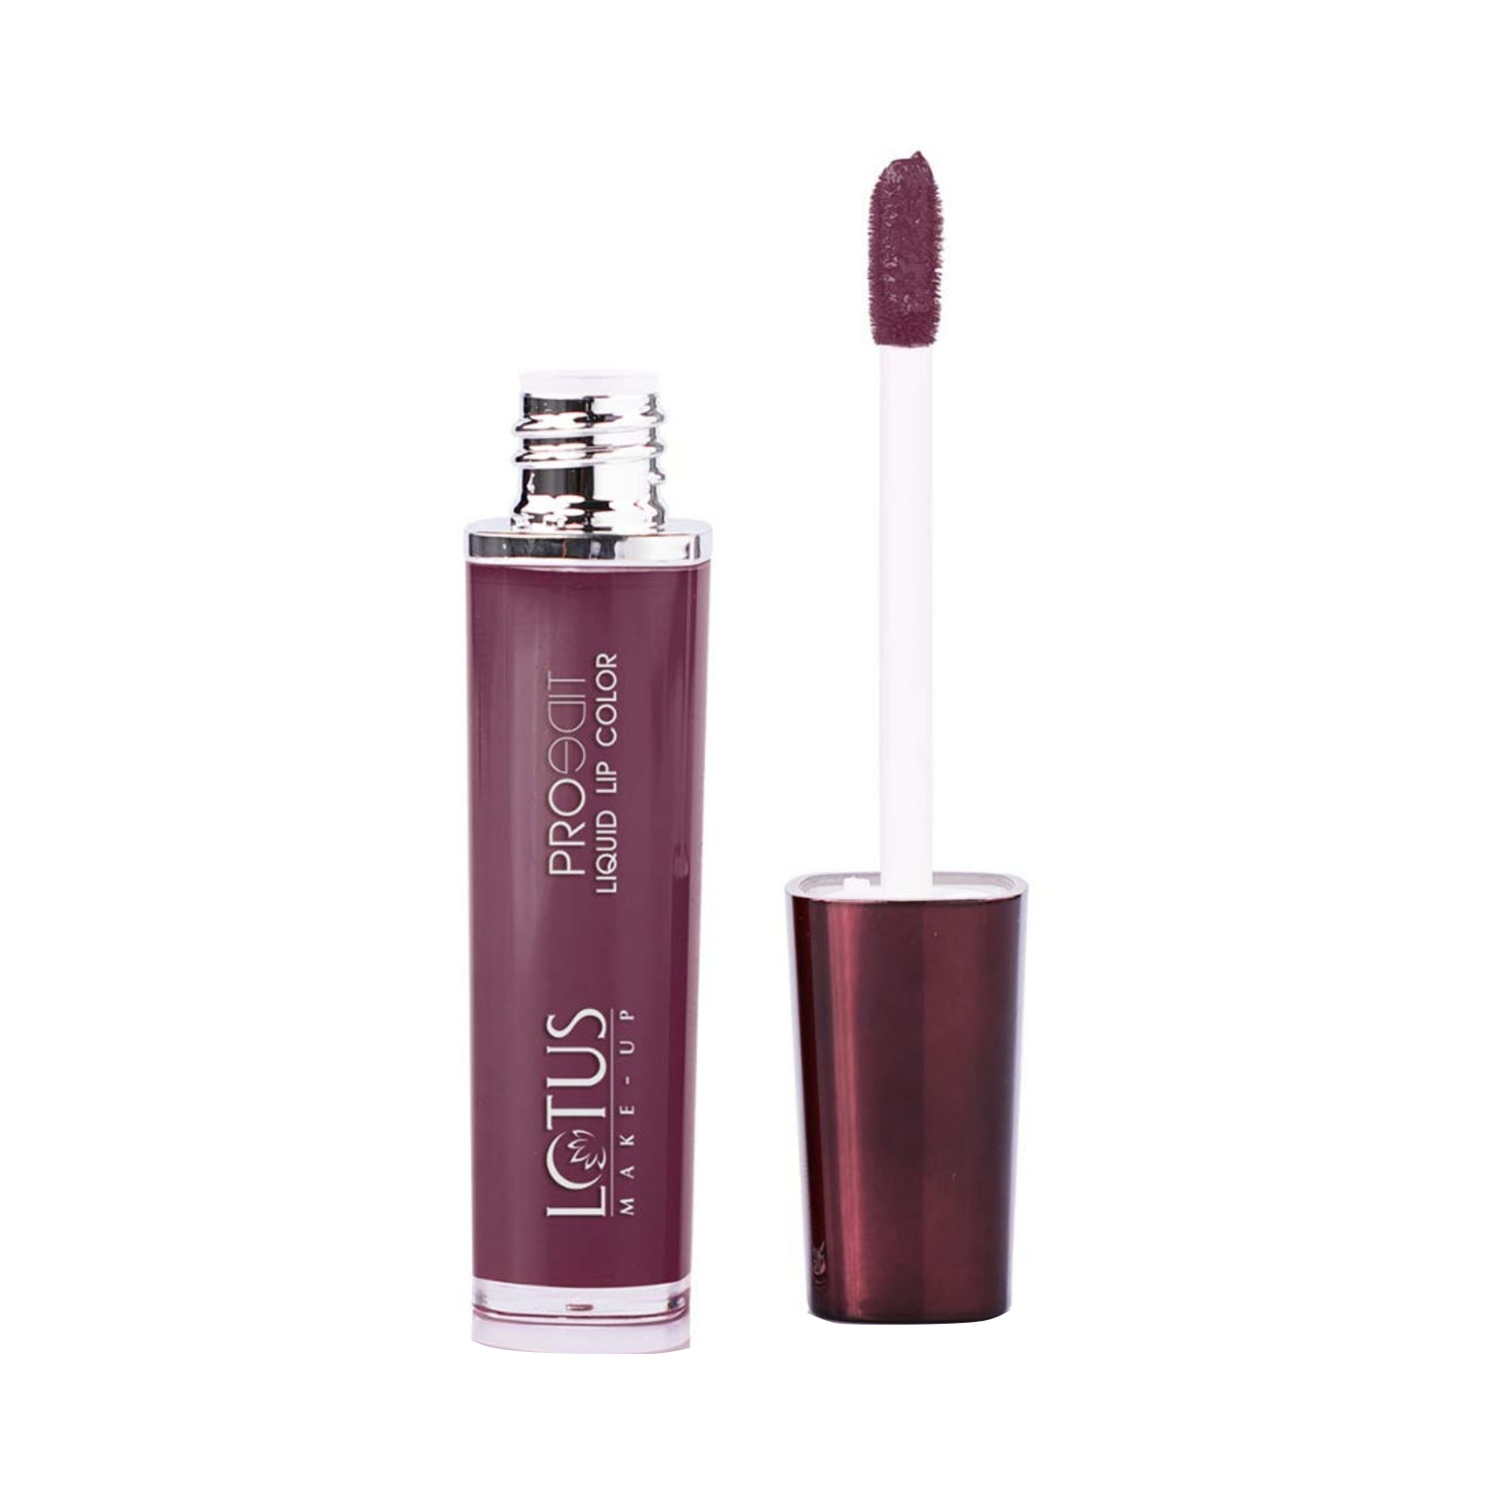 Lotus | Lotus Makeup Proedit Liquid Matte Lip Color - PLC05 Jewel Rose (8g)